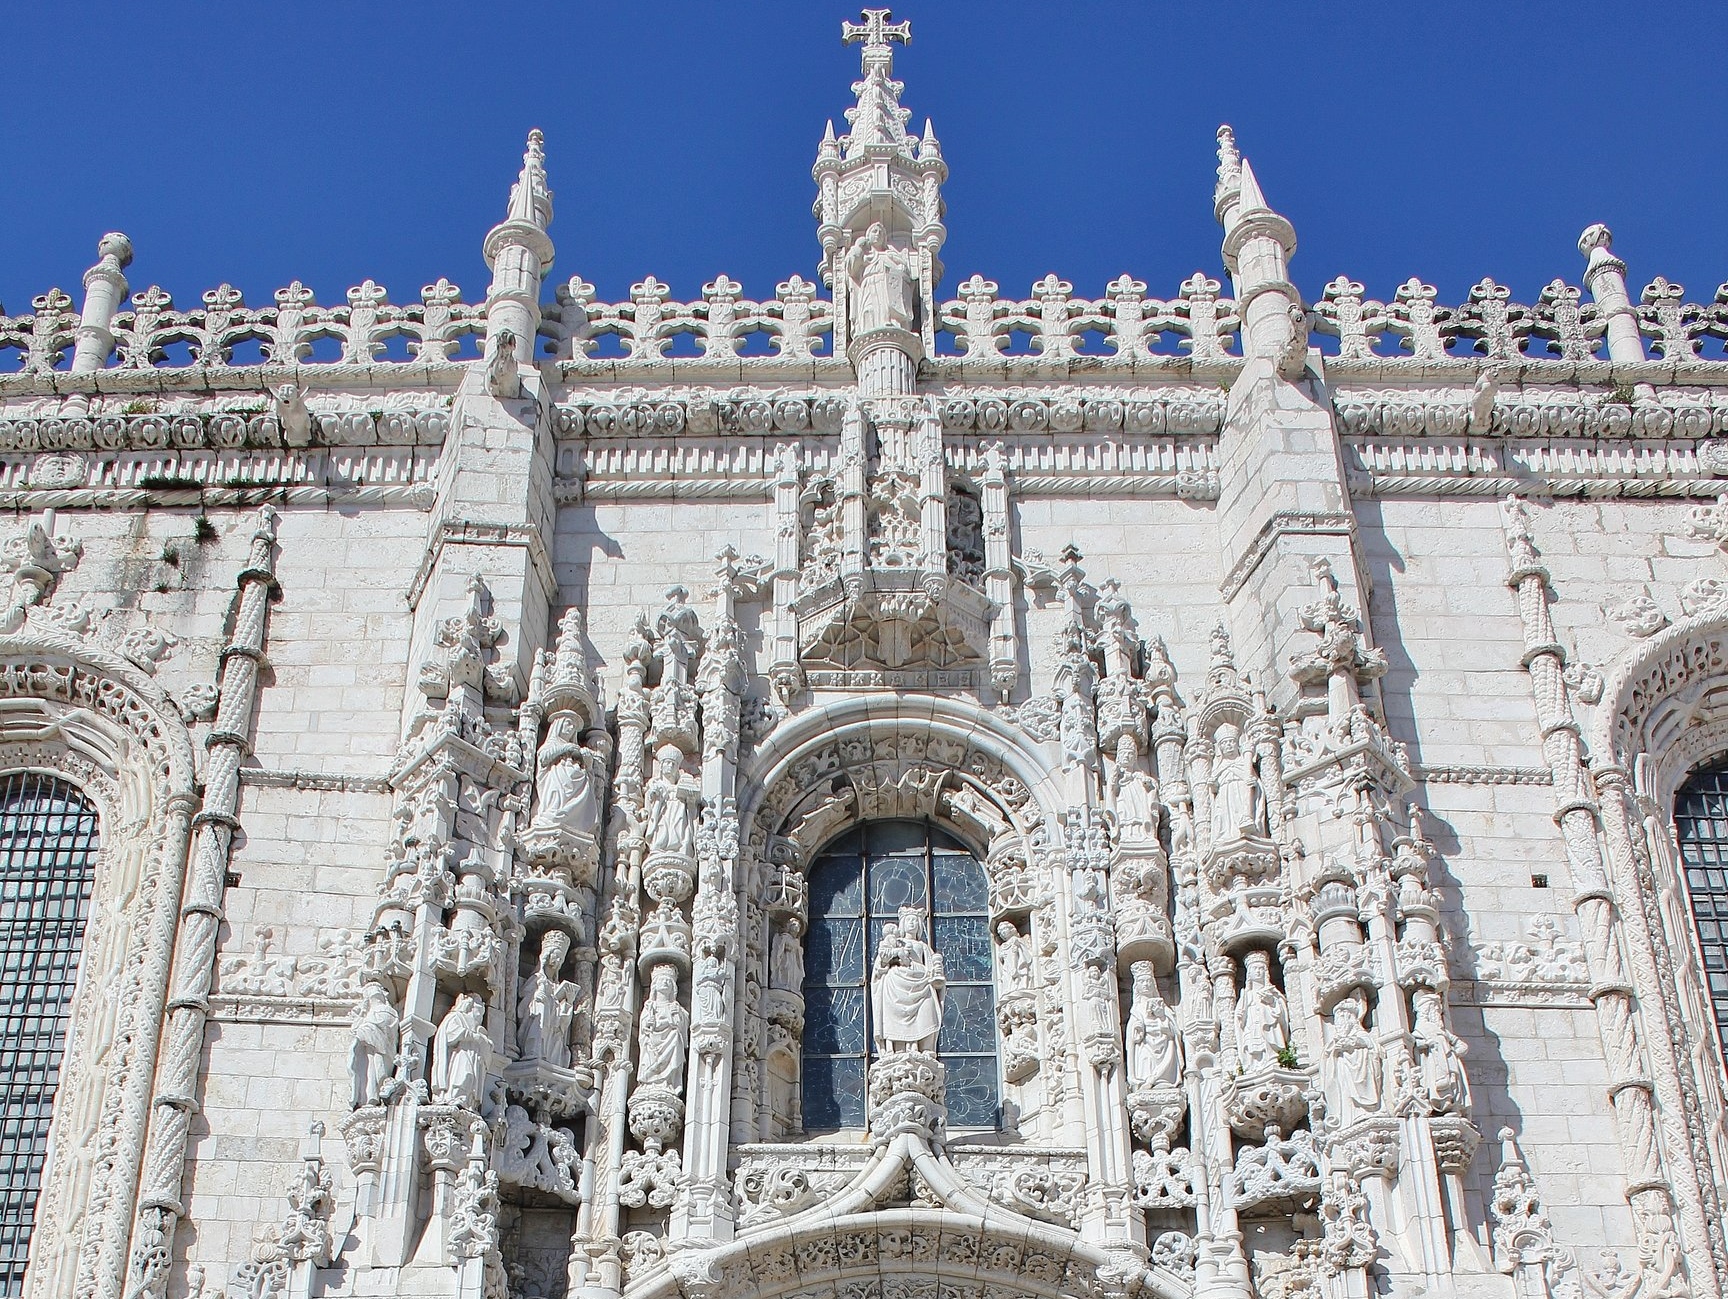 Mosterio dos Jeronimos in Belem, Lisbon